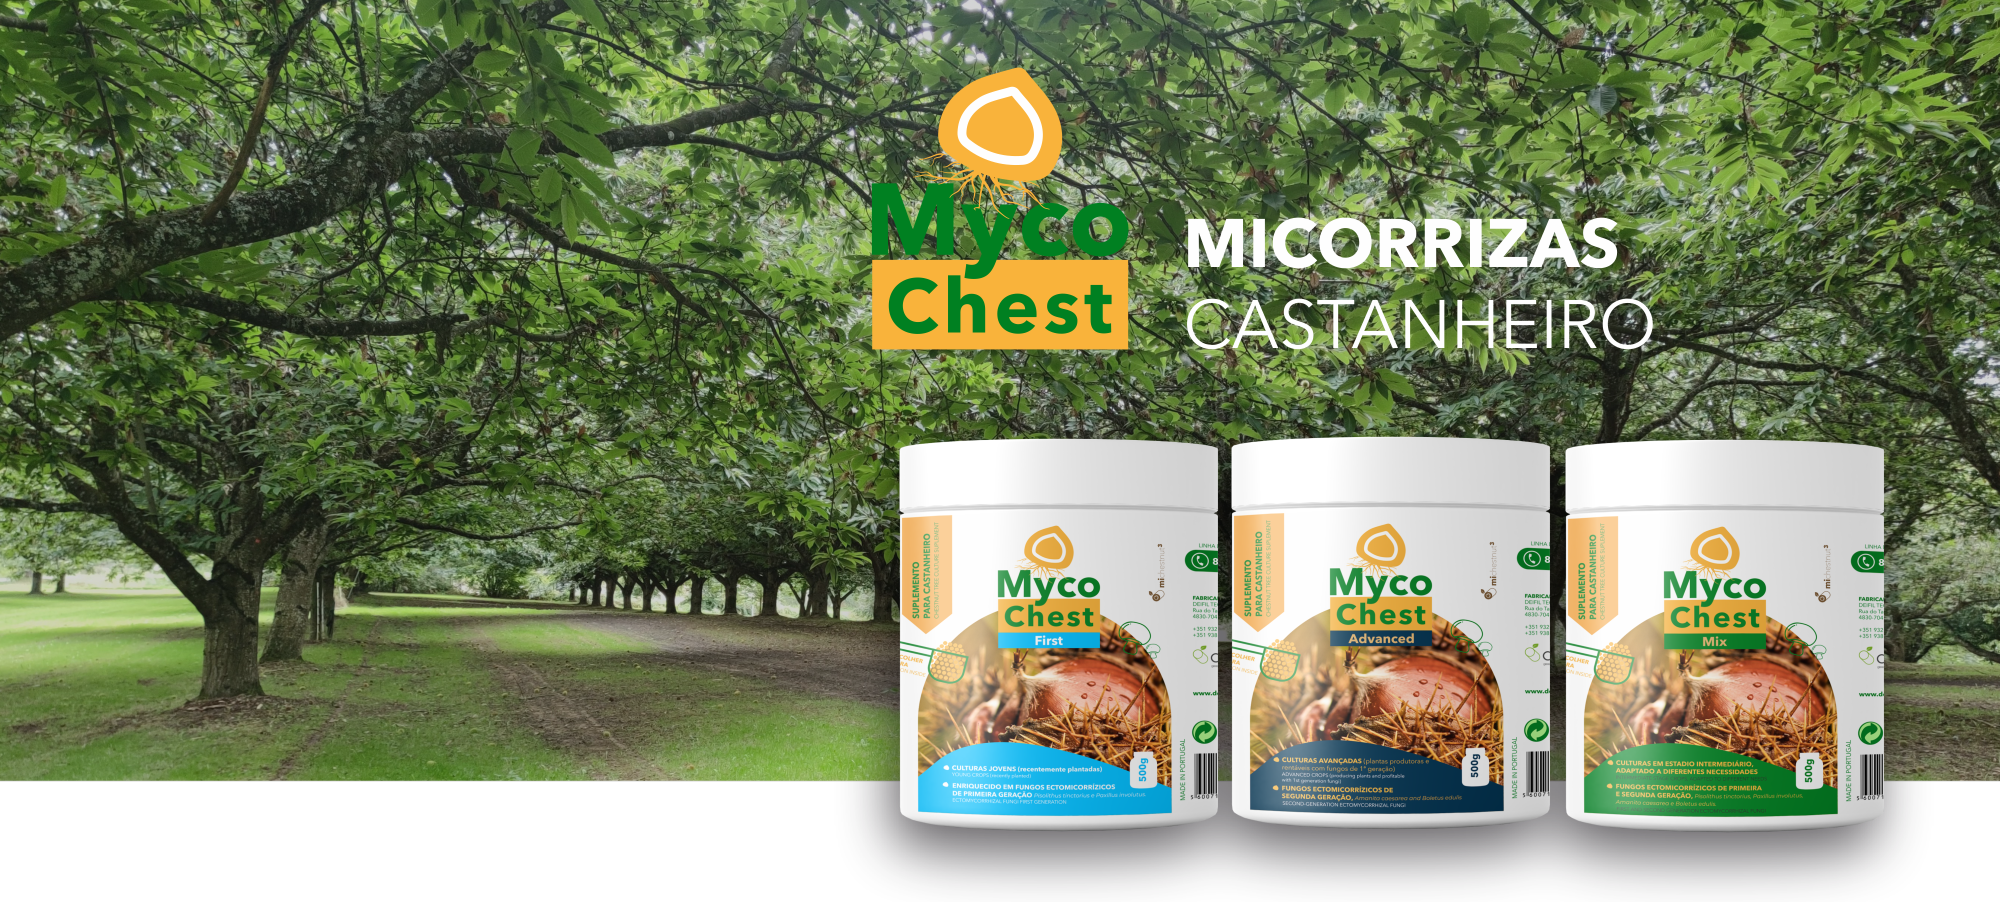 MycoChest – A nova gama de produtos micorrizicos